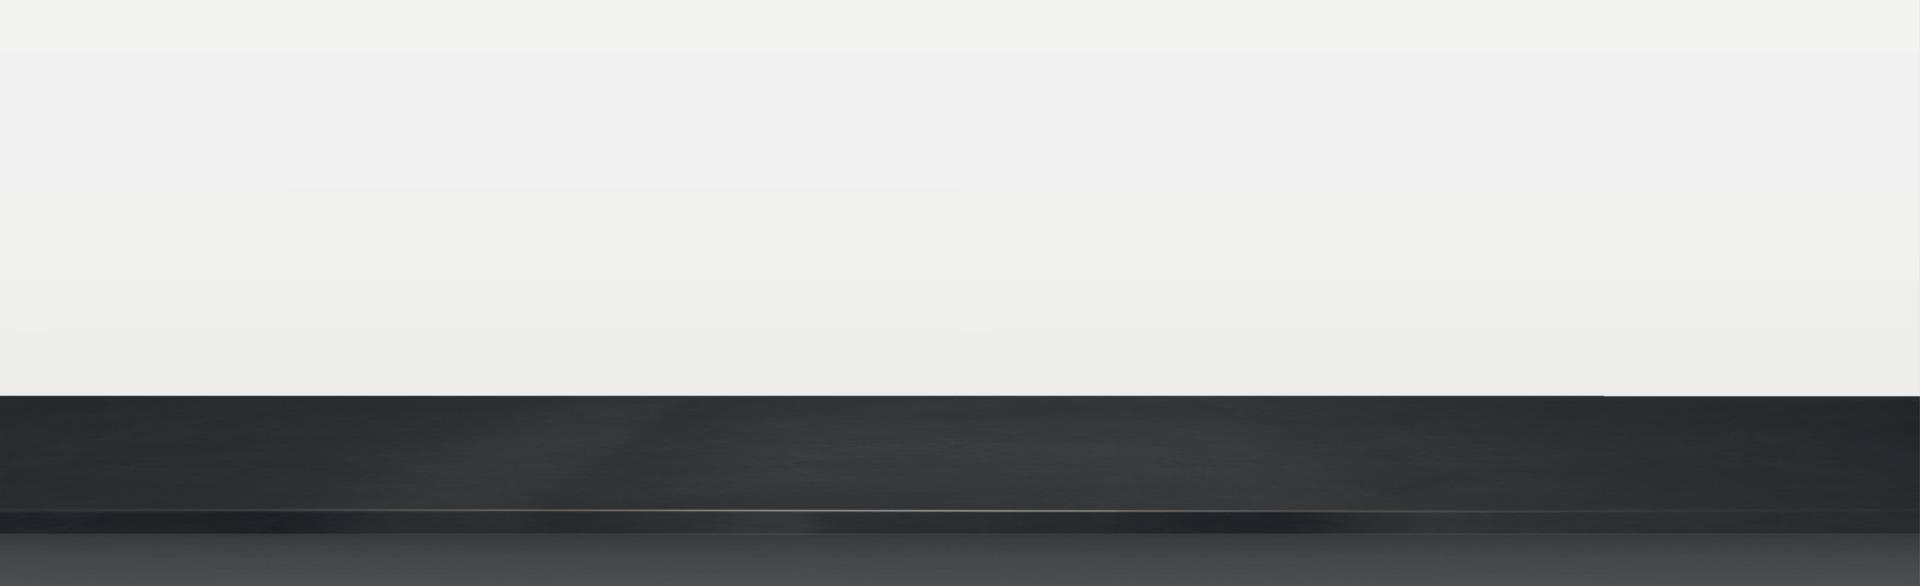 tampo de mesa de metal preto sobre fundo panorâmico branco, modelo de web promocional - vetor